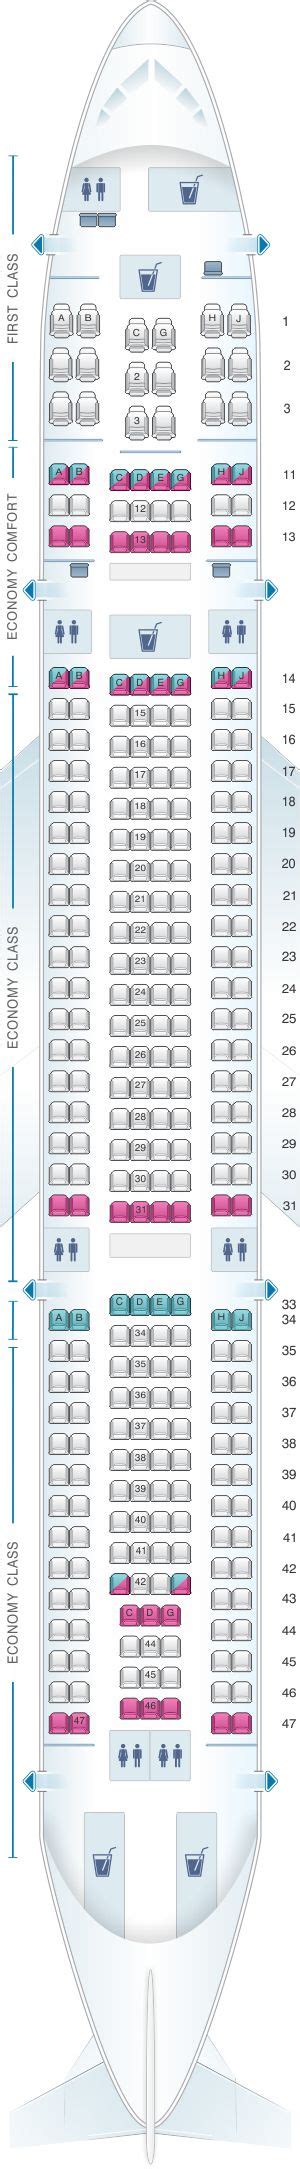 Hawaiian Airlines Airbus A330 Seating Chart